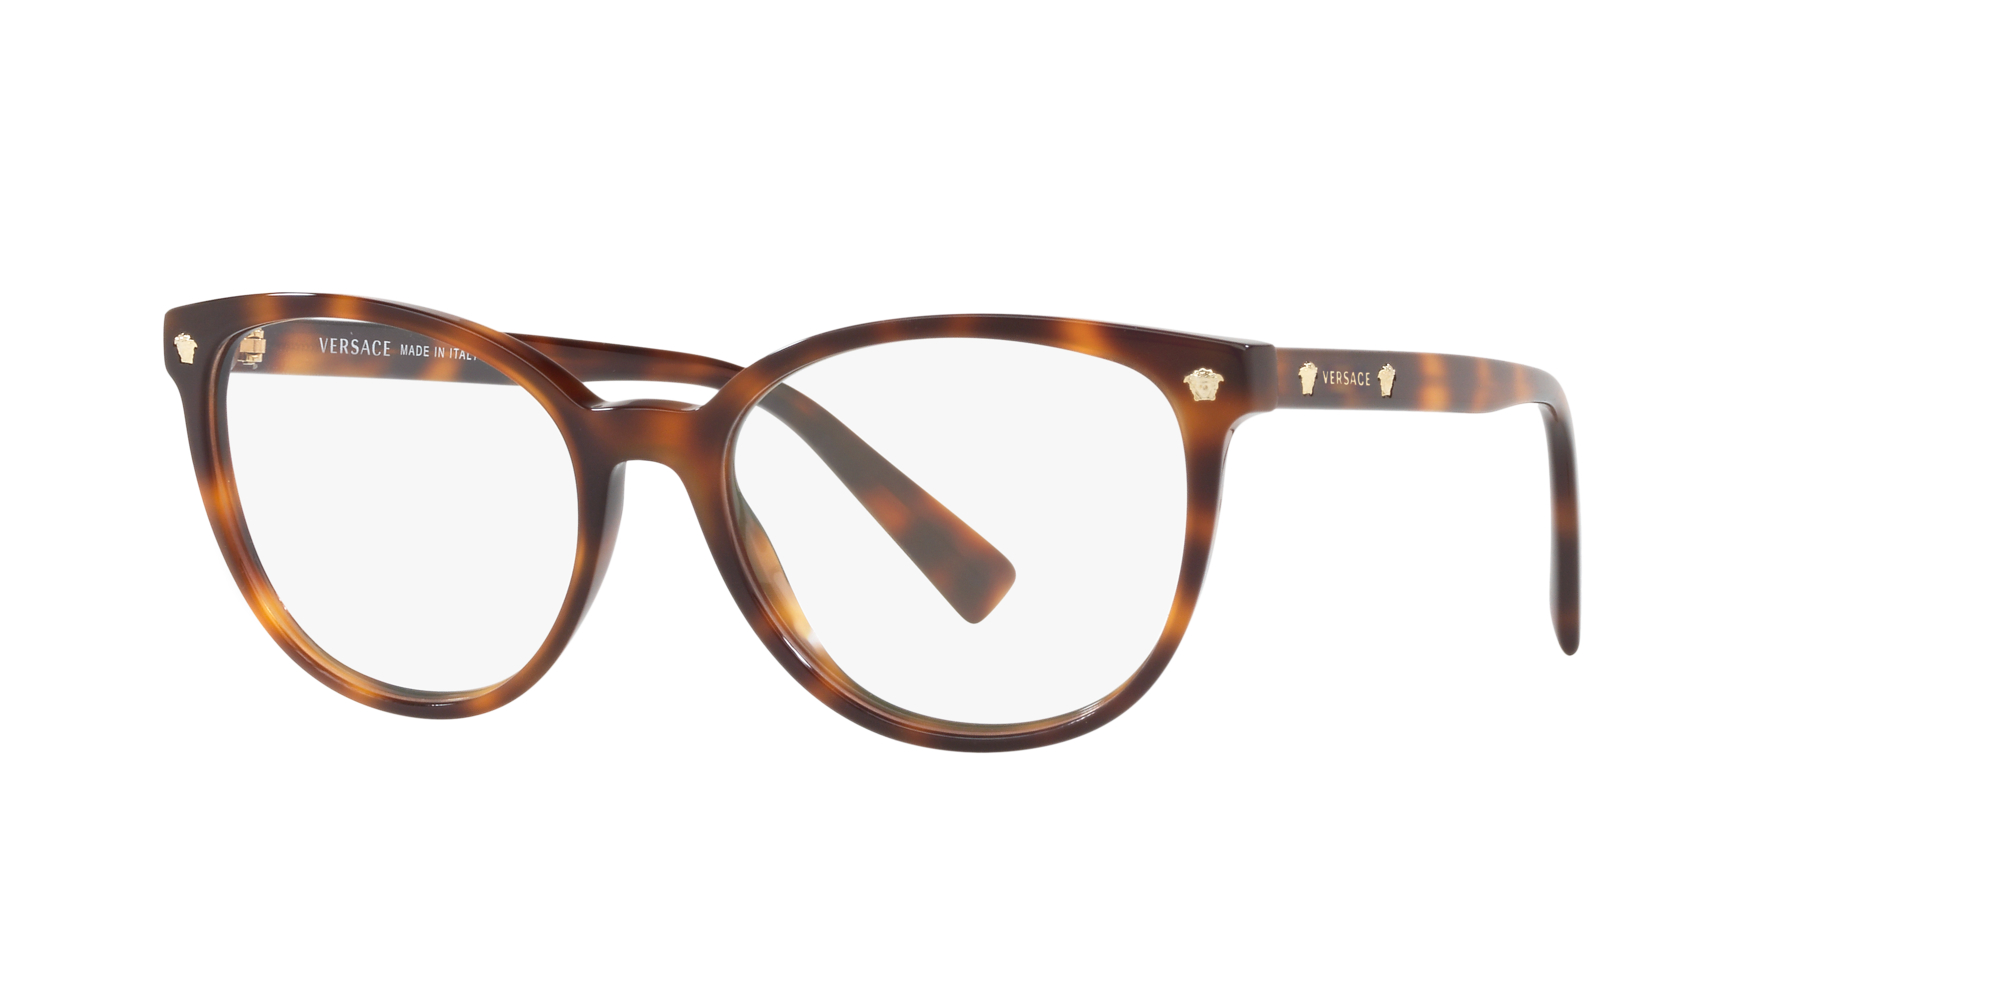 versace men's eyeglasses lenscrafters